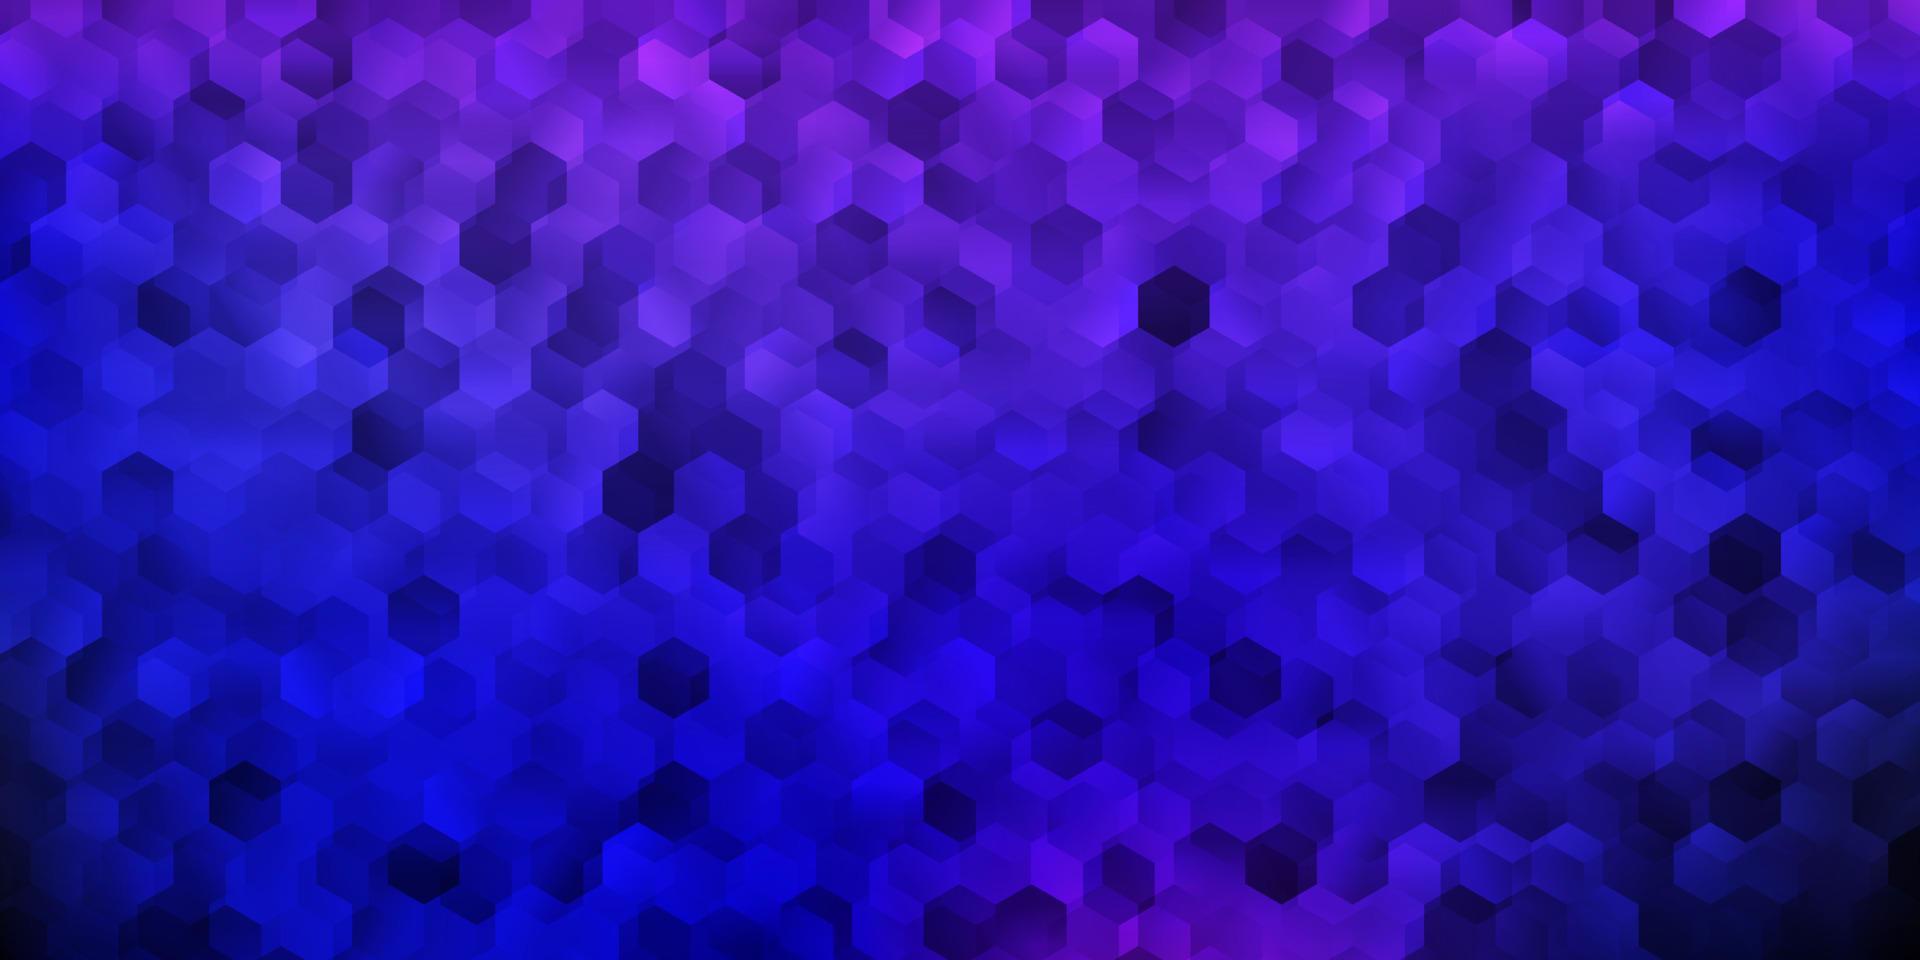 mörk lila vektor bakgrund med ett antal hexagoner.